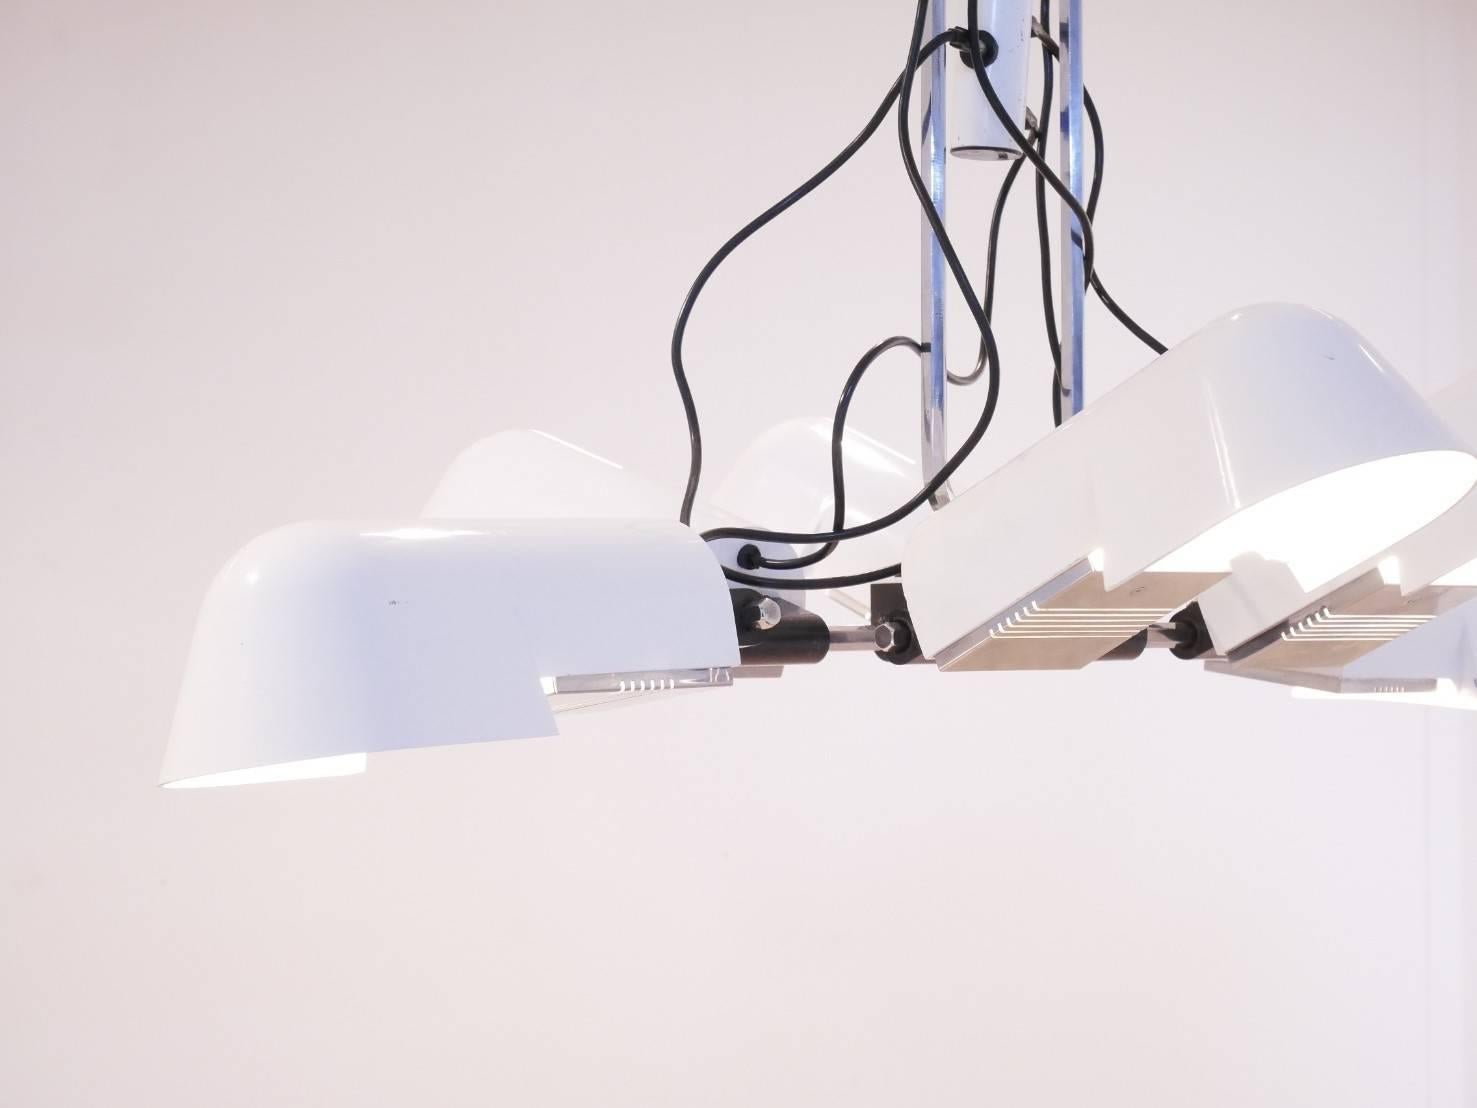 Aluminum Italian Design “Pala” Chandelier / Lamp by Danilo & Corrado Aroldi for Luci